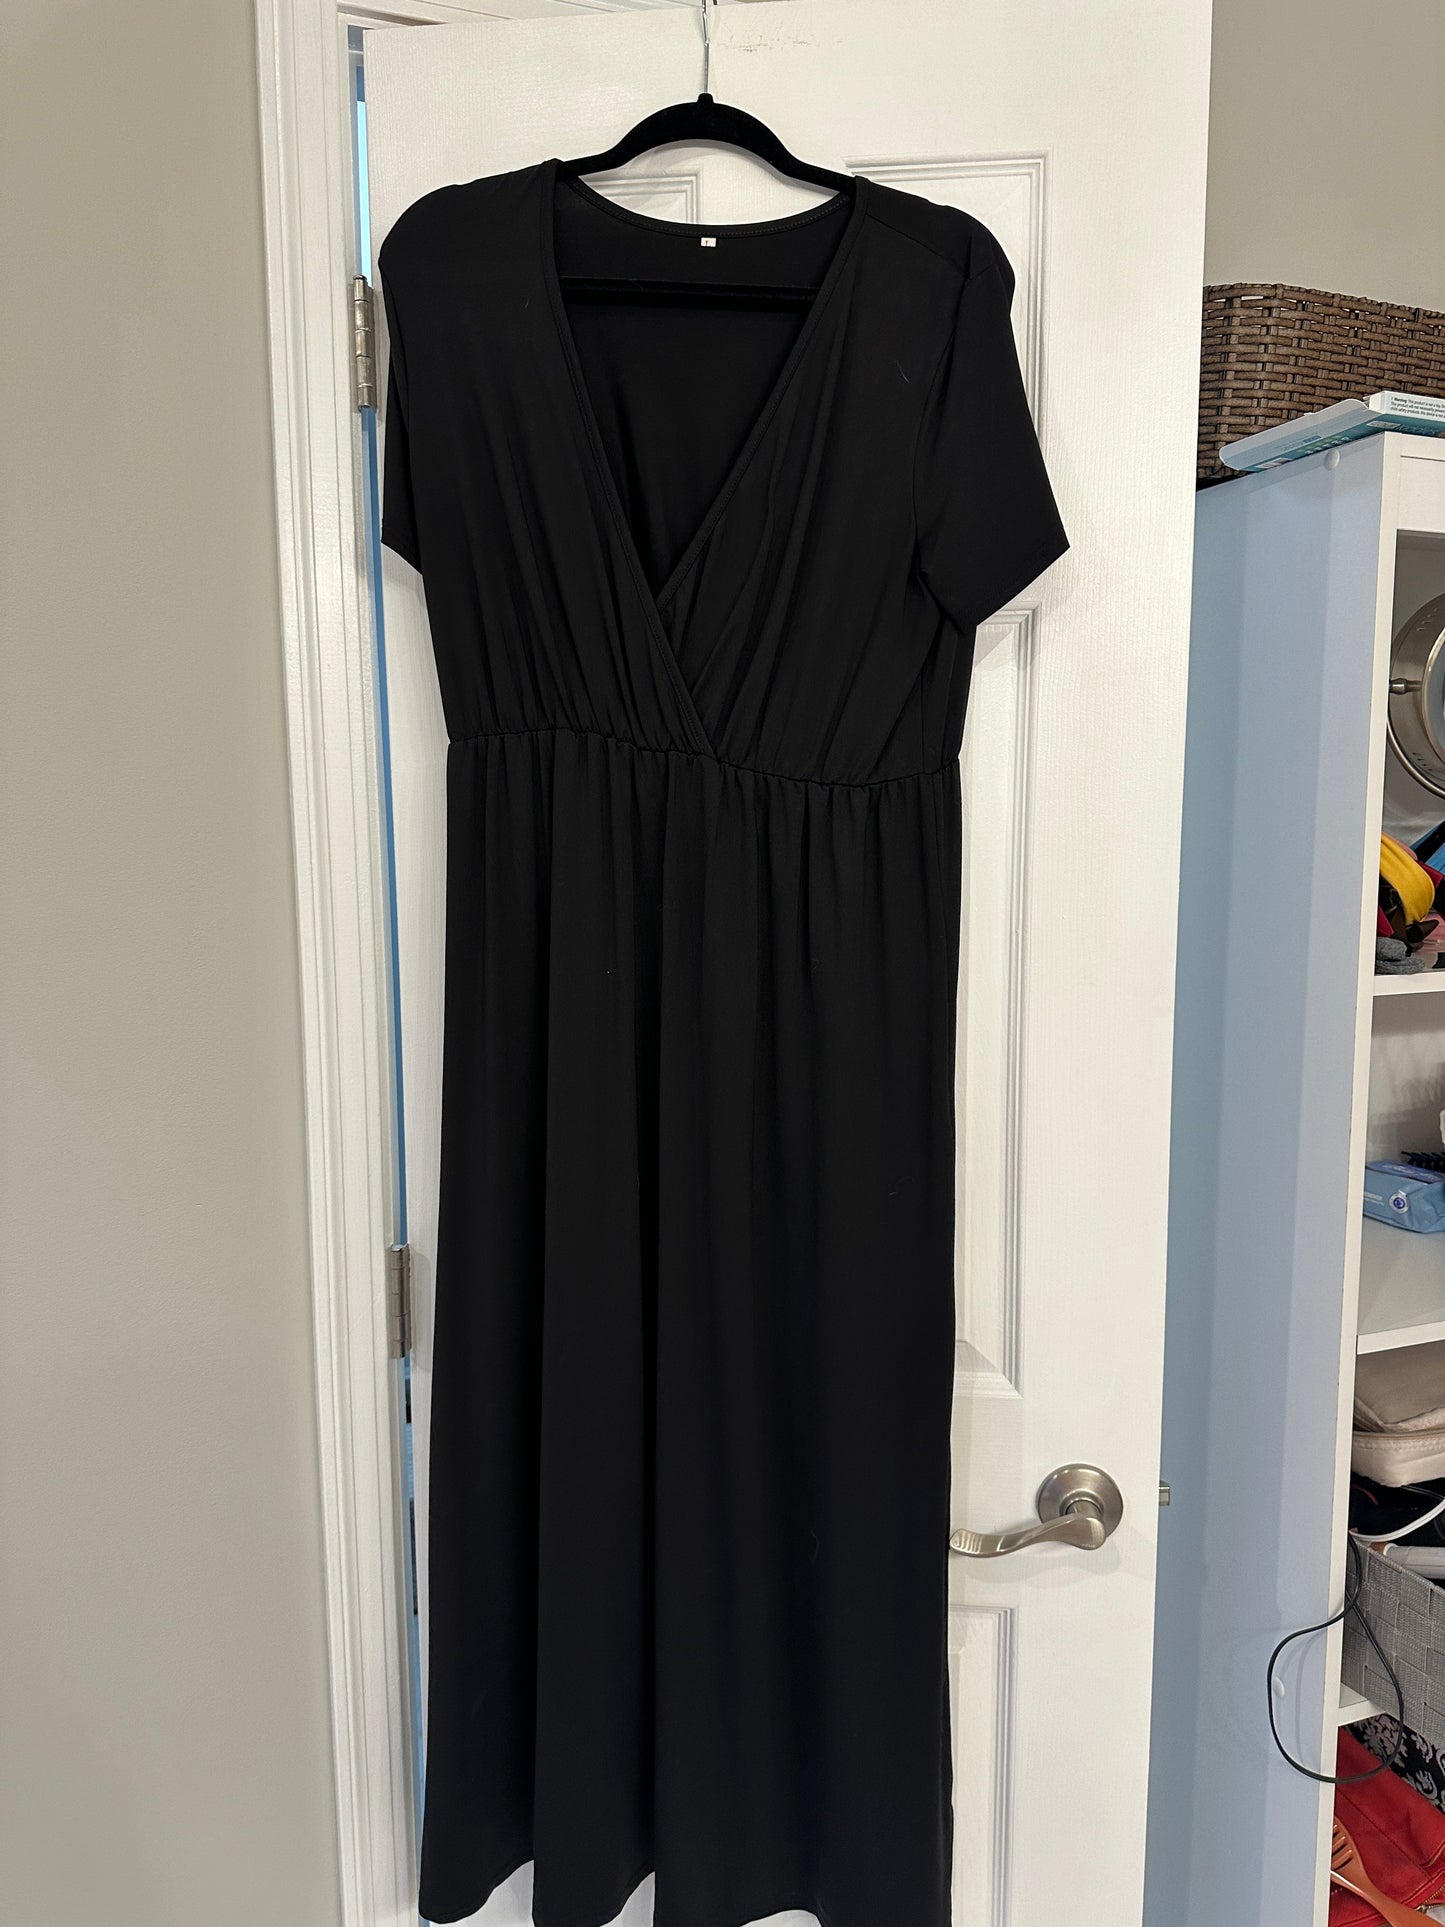 Size Large V Neck Black Long Dress - Women's